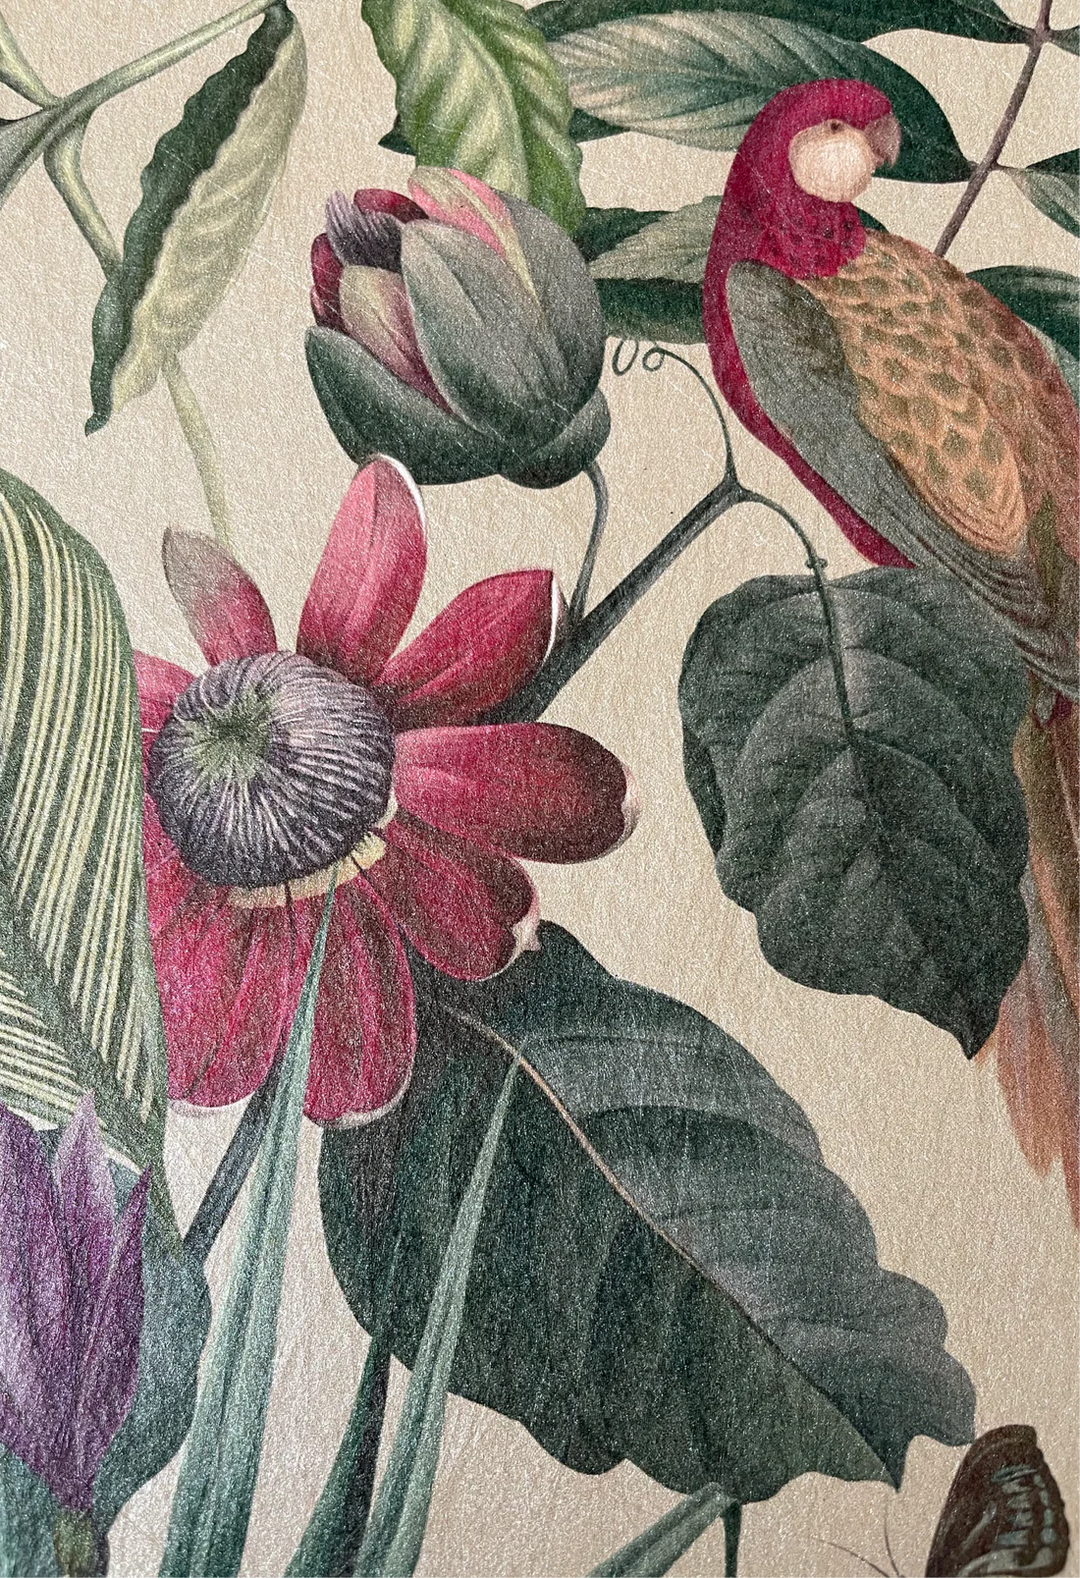 Deus-ex-gardenia-Passiflora-wallpaper-Antique-cream-background-columbian-tropical-rainforest-feeling-birds-butterflies-ferns-jungle-hand-illustrated-print-pattern